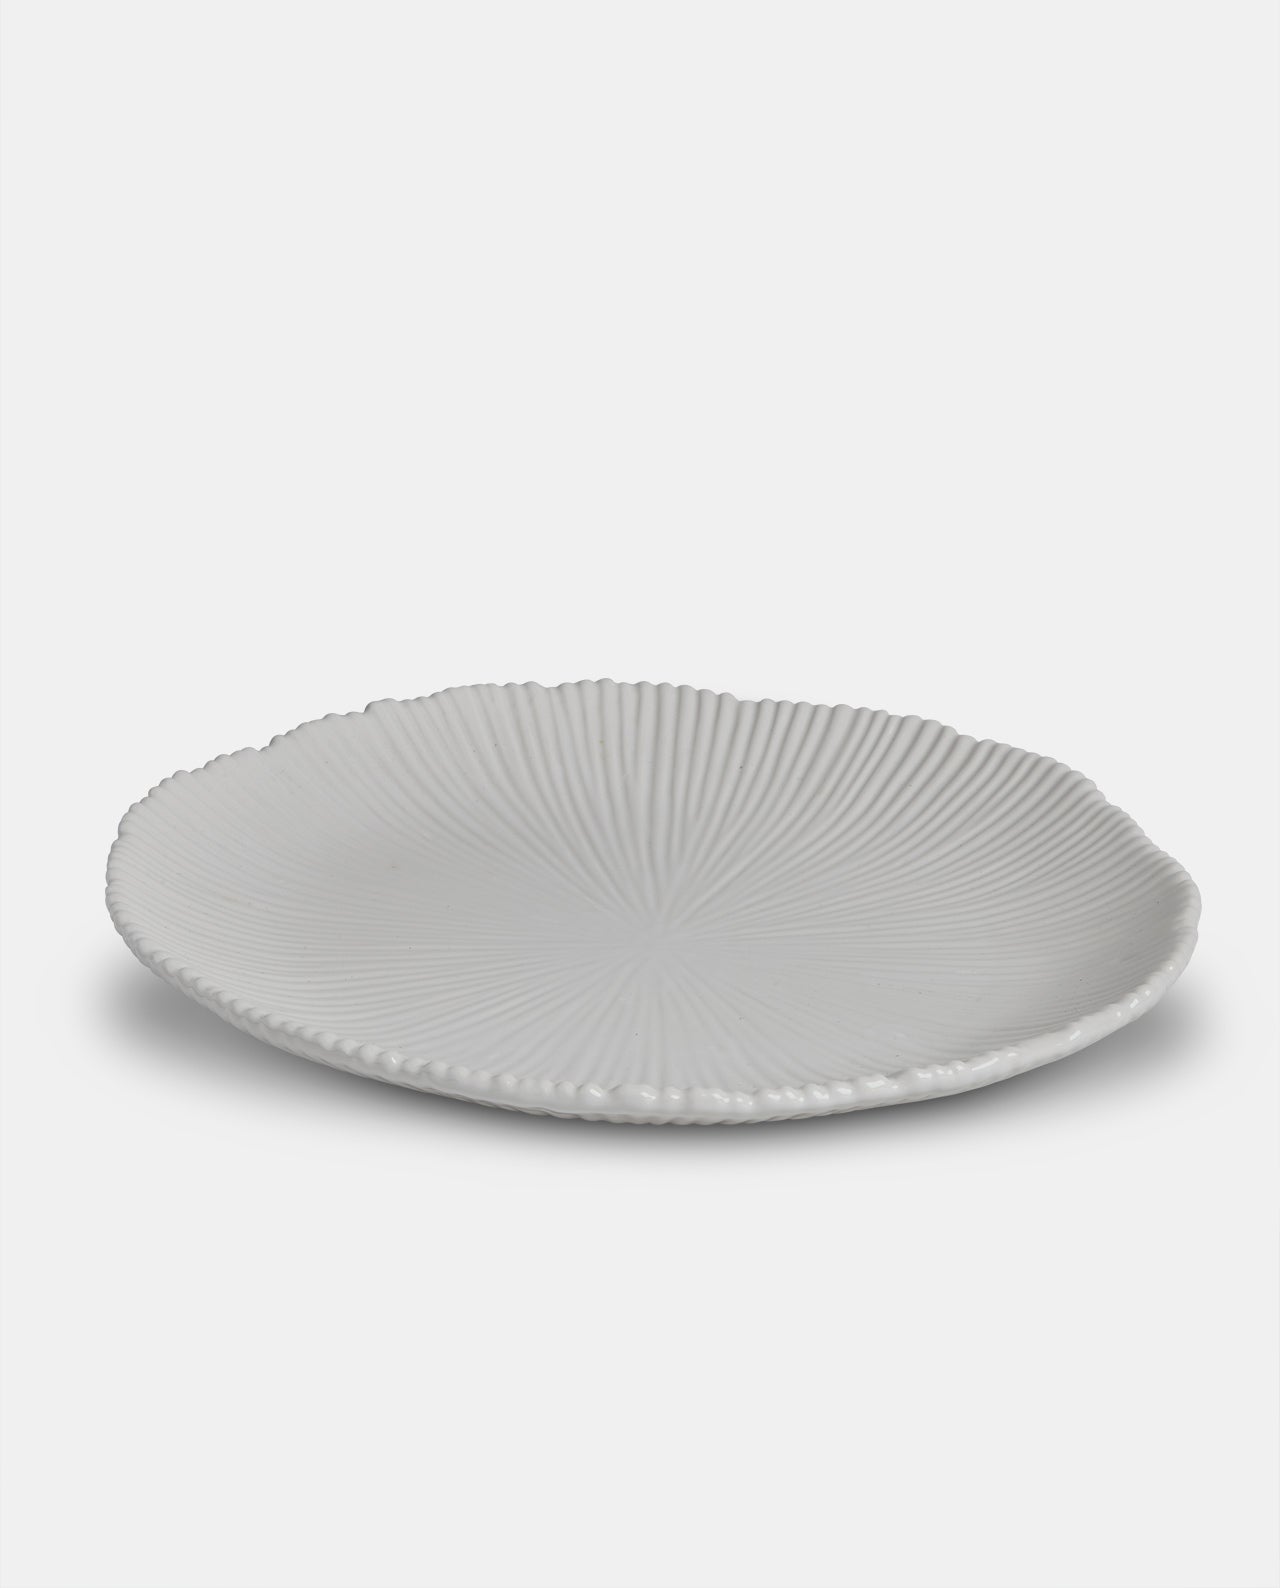 White Ceramic Serving Plate (7069986554035)